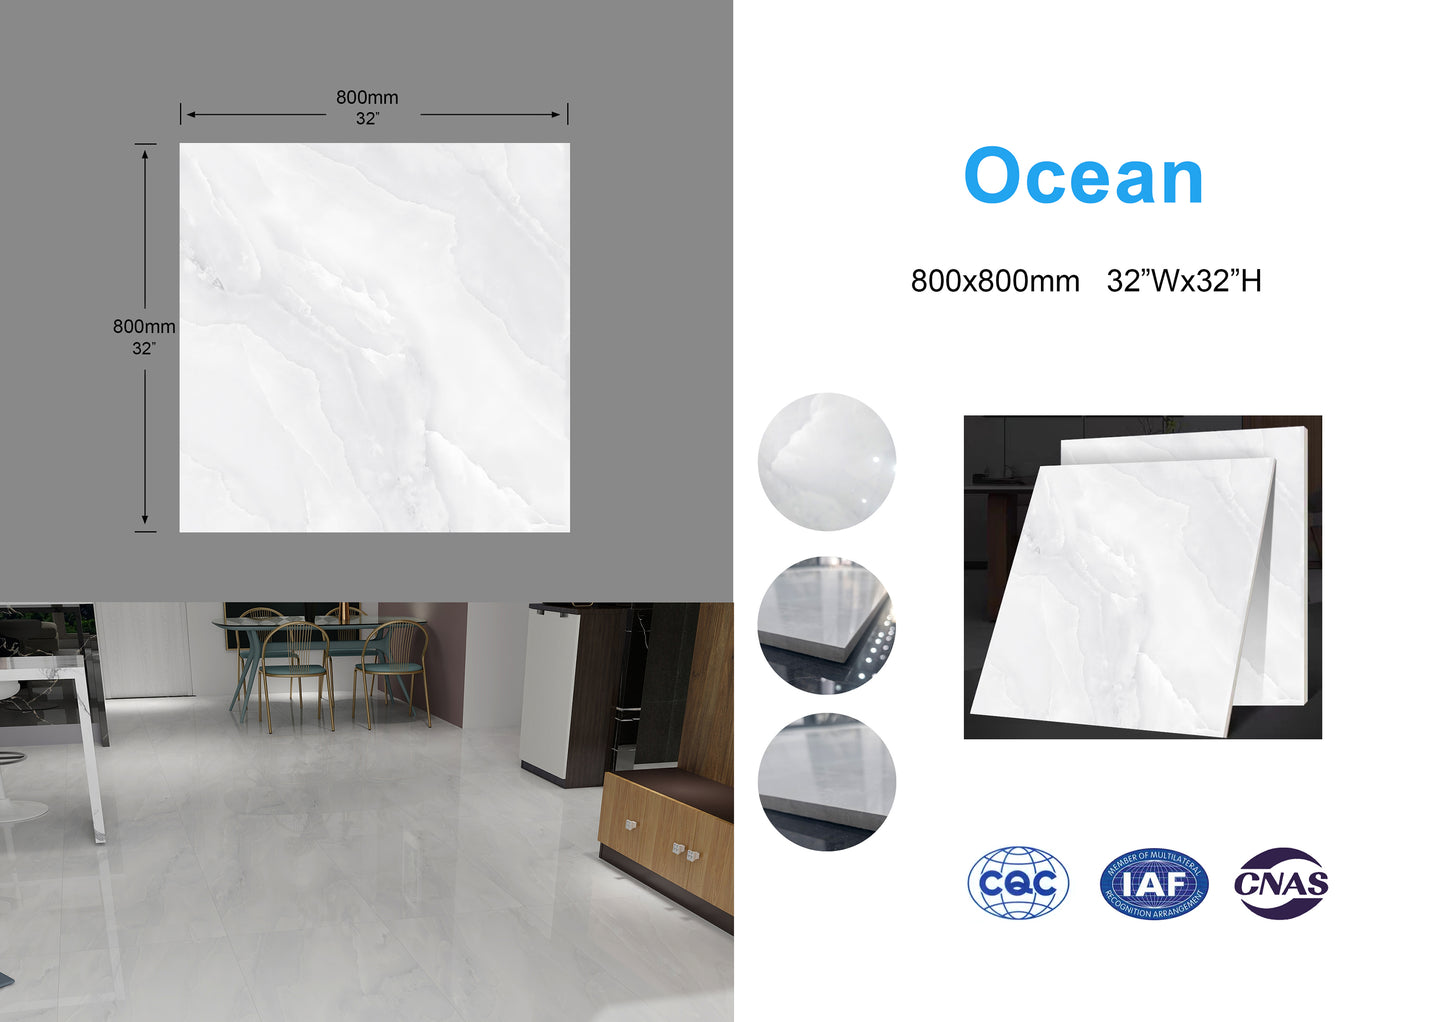 Ocean family Full Polished Glazed Tile light gray 32"x32" 3pcs/box 21.33sf/box $1.99/sf  2000sf+ $1.89/sf